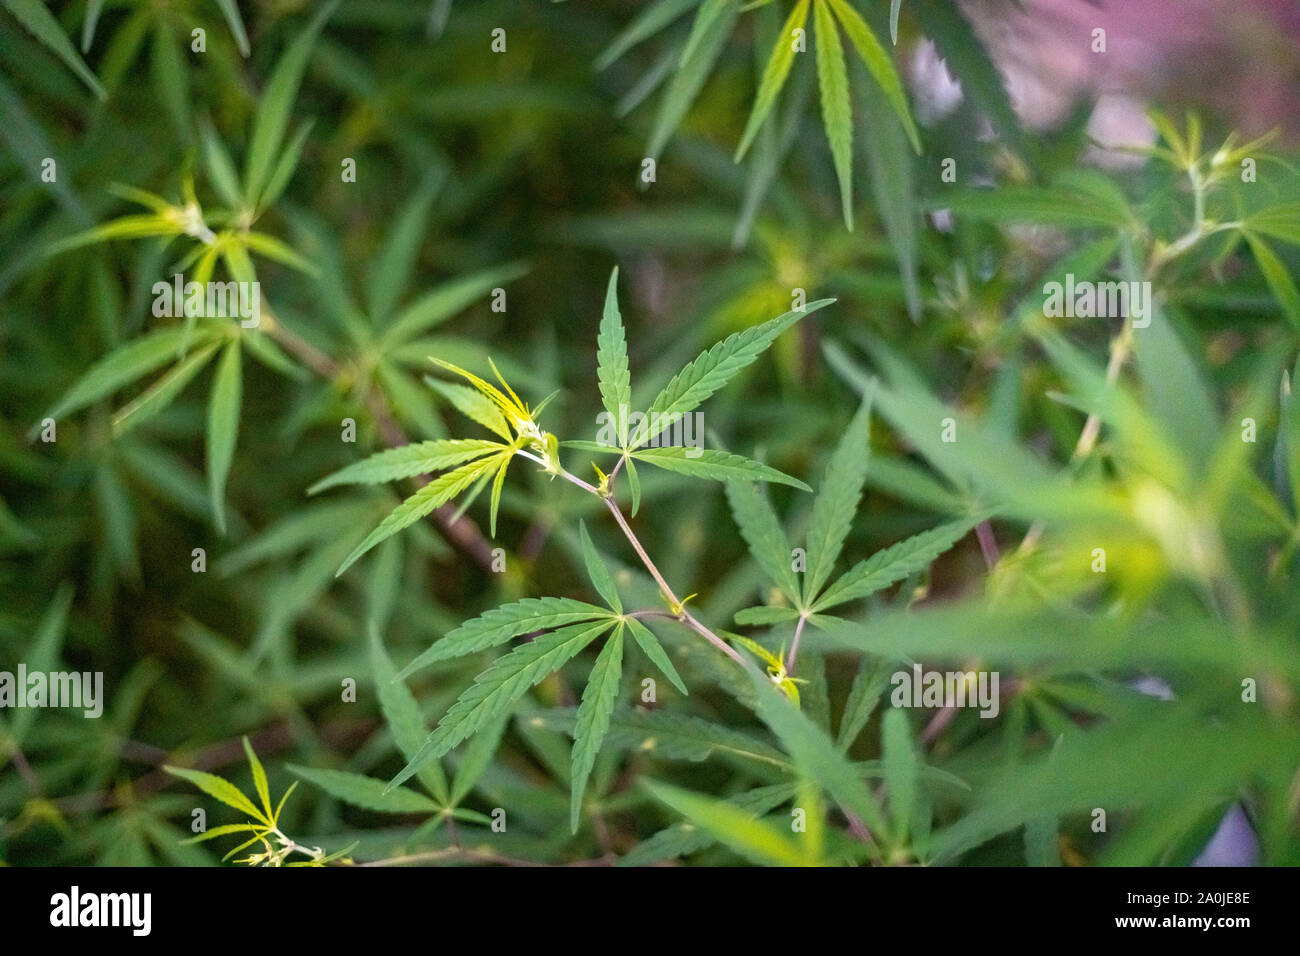 Marijuana or hemp plants in the wild Stock Photo